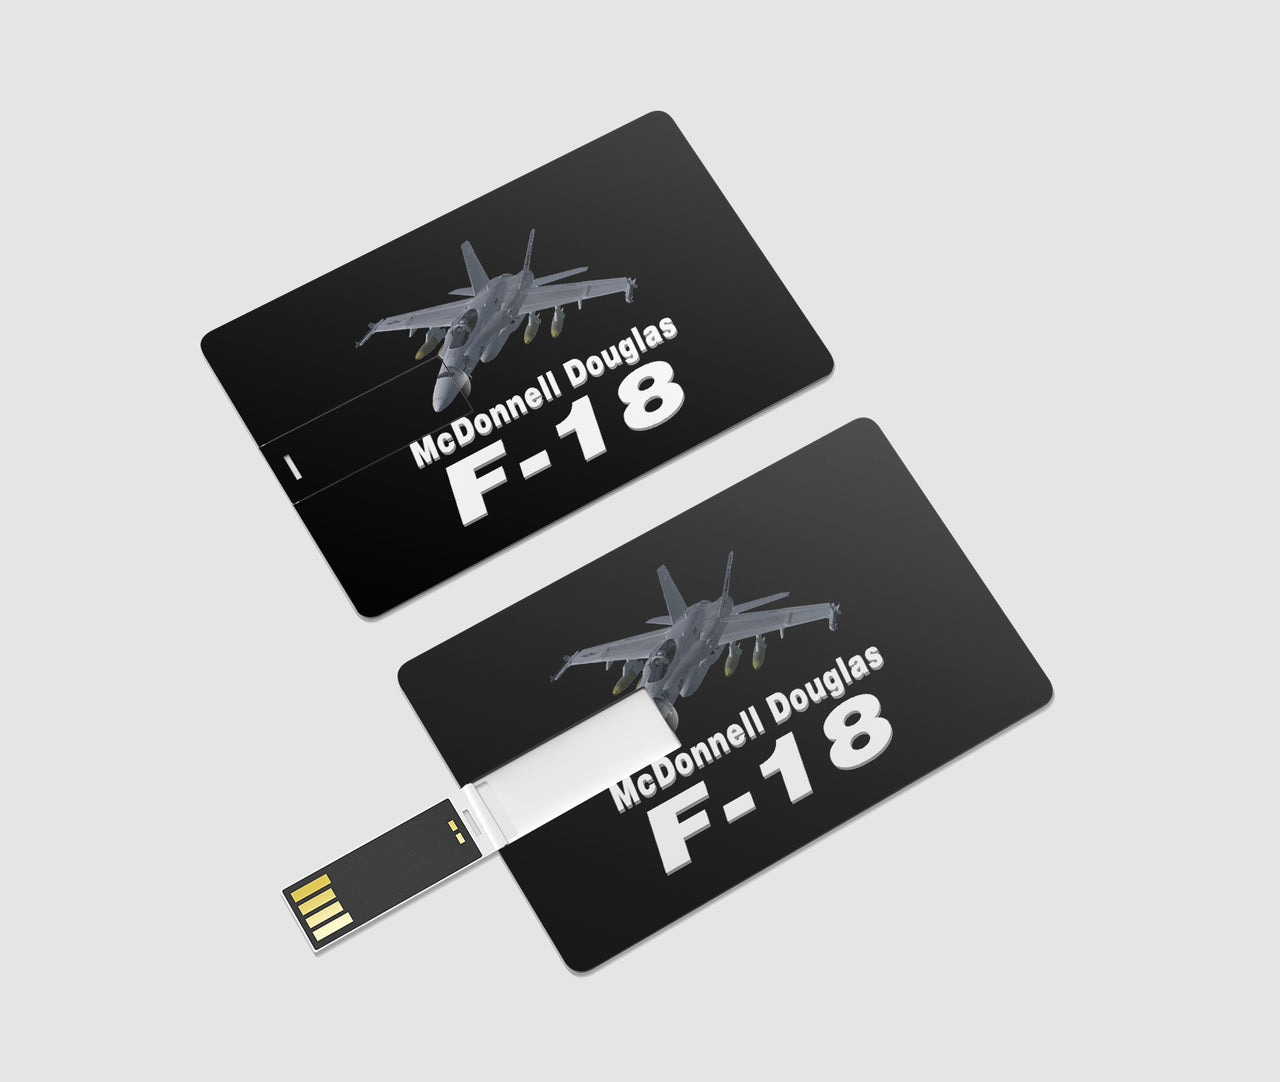 The McDonnell Douglas F18 Designed USB Cards